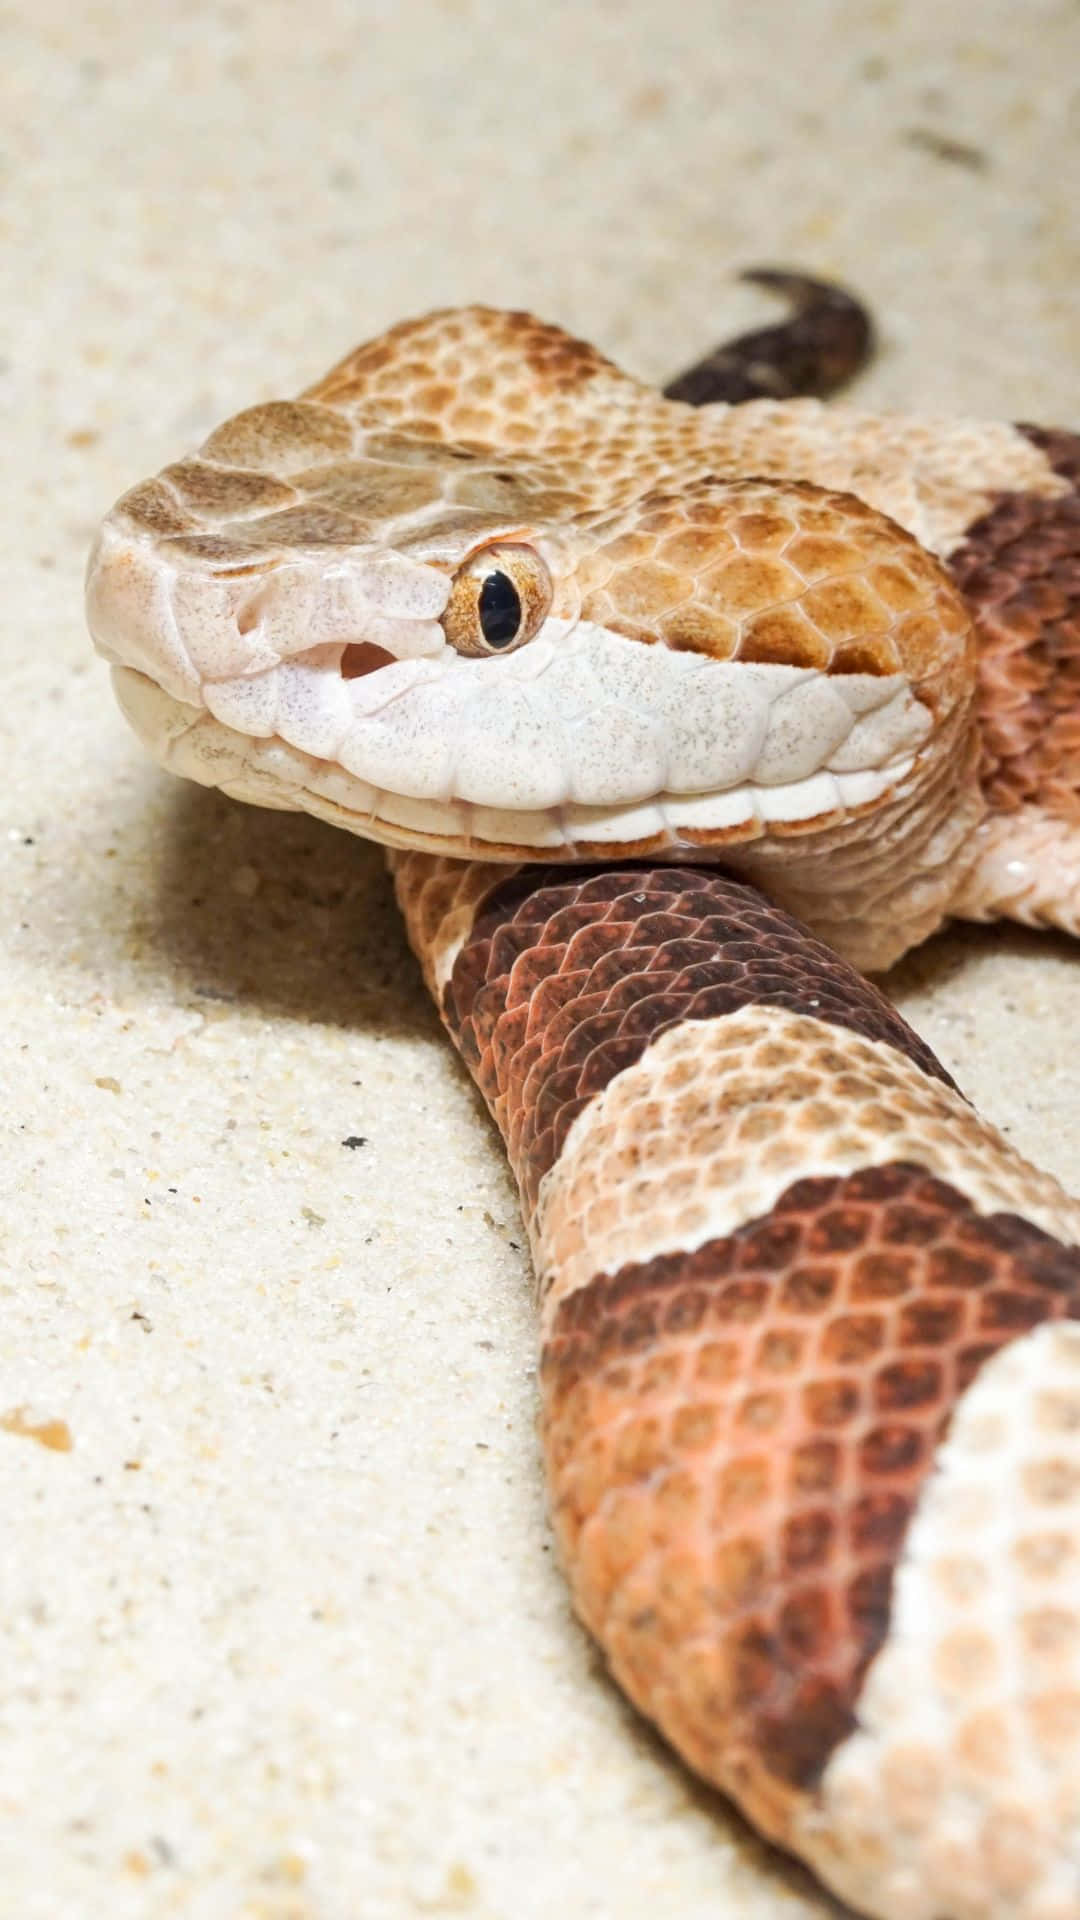 “a Slithering Snake In Its Natural Habitat”